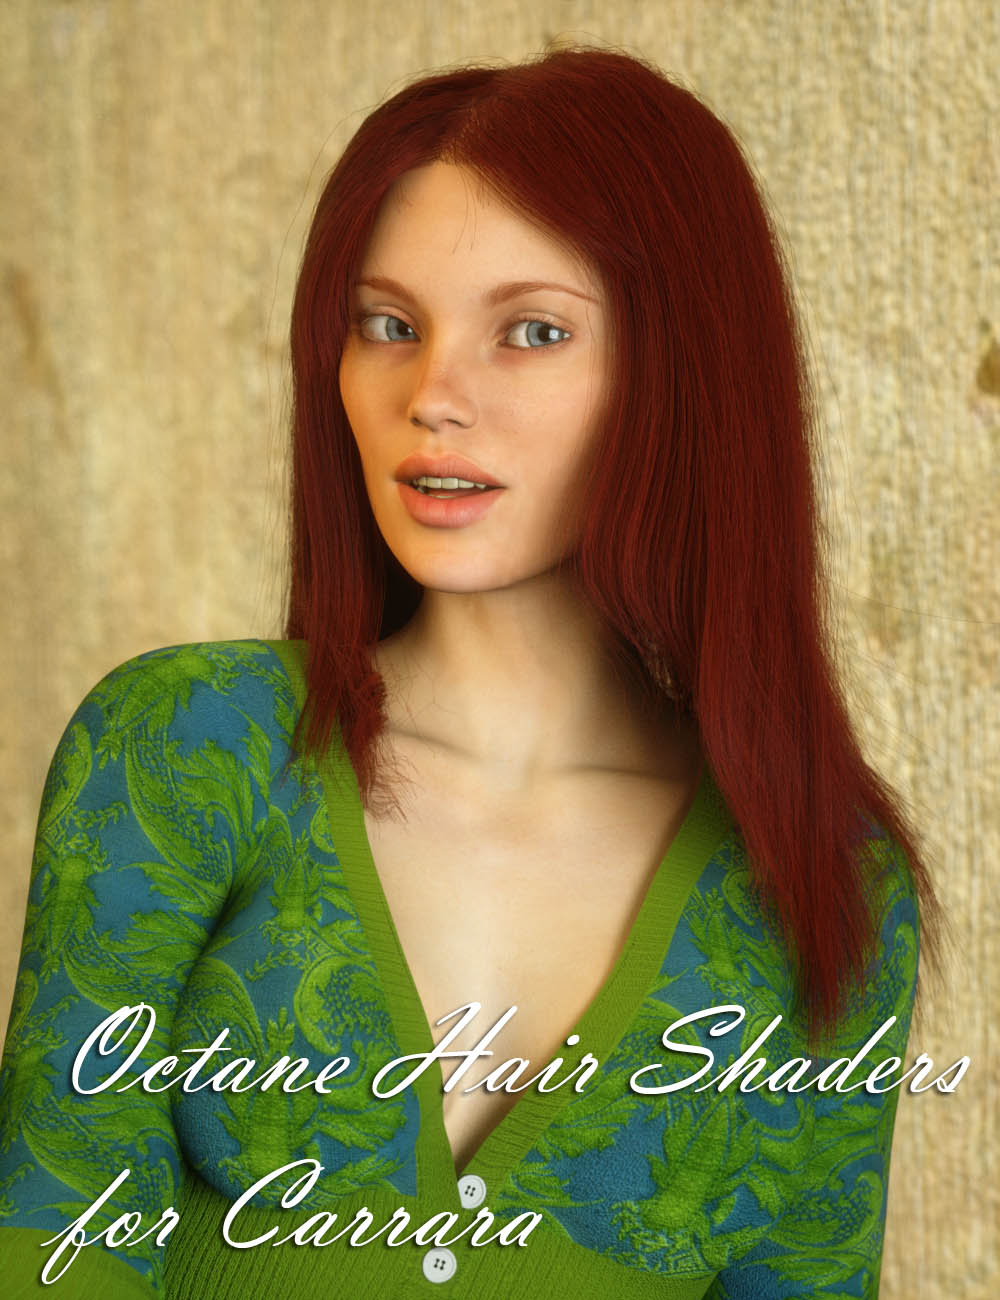 octane render for daz studio download